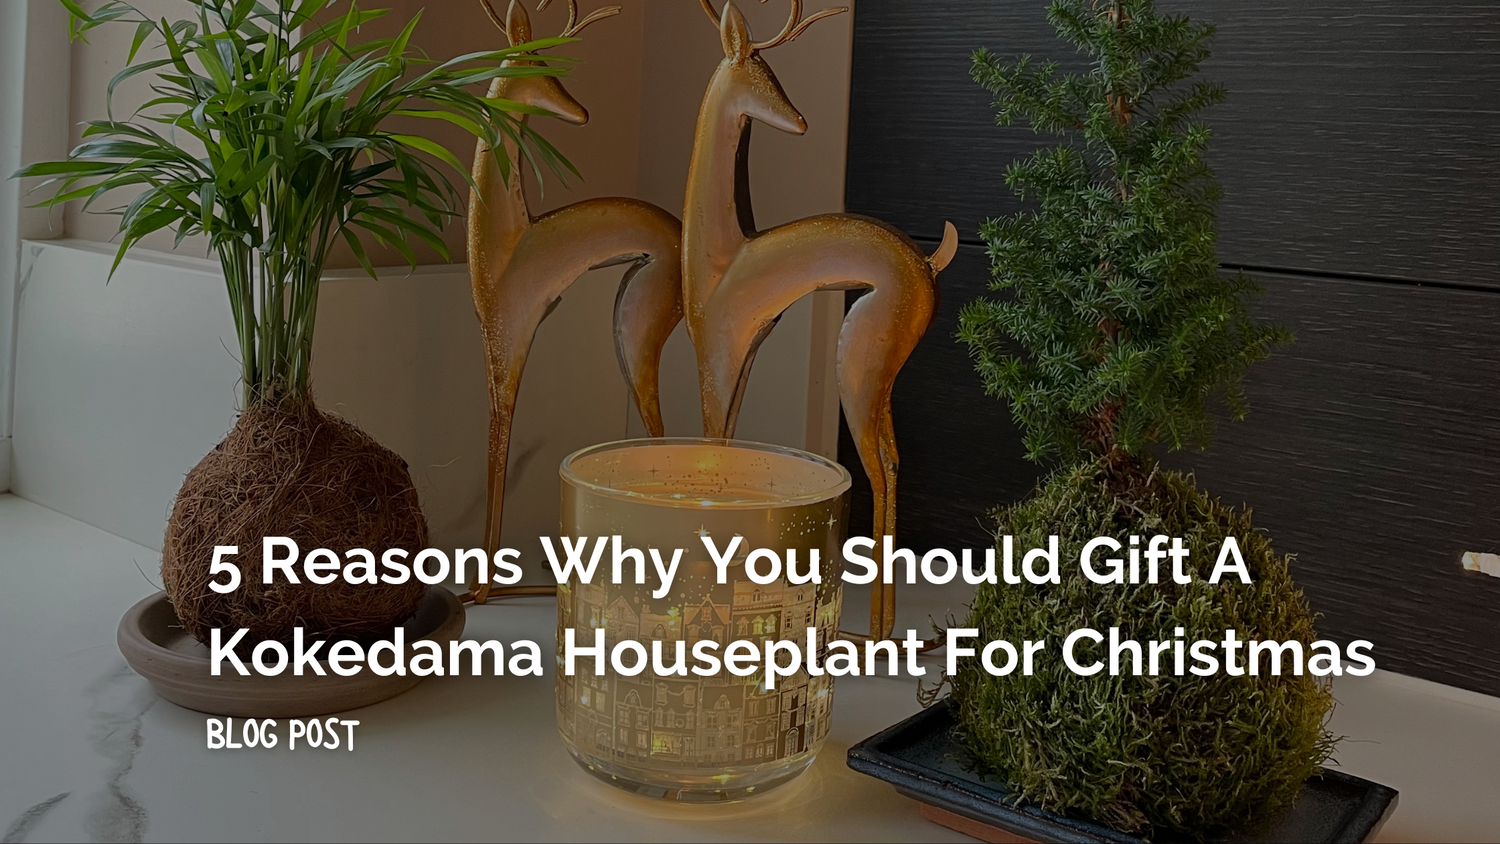 5 Reasons Why You Should Gift a Kokedama Houseplant for Christmas